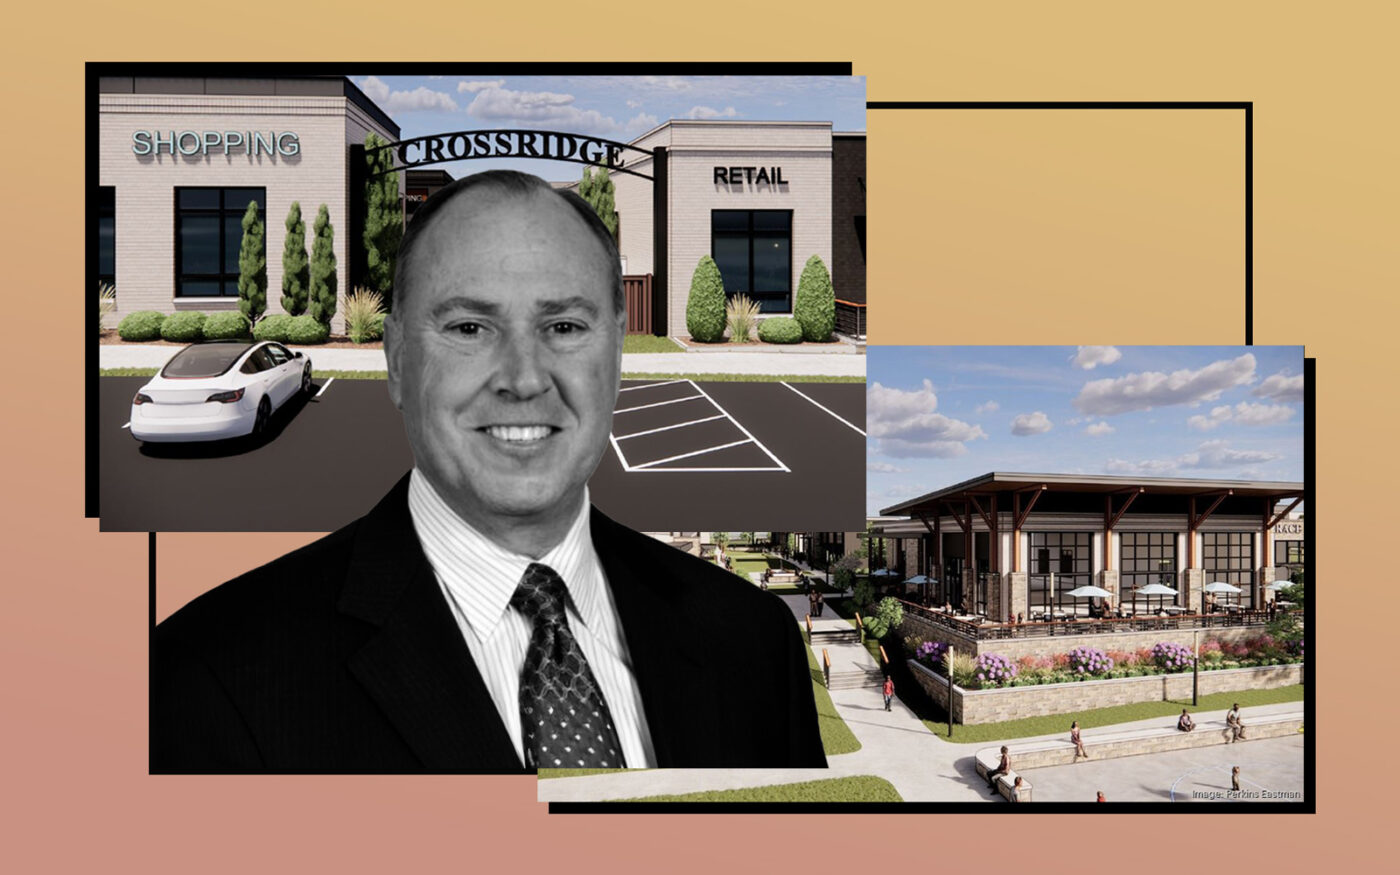 CrossRidge Center Getting $150M Retail Phase